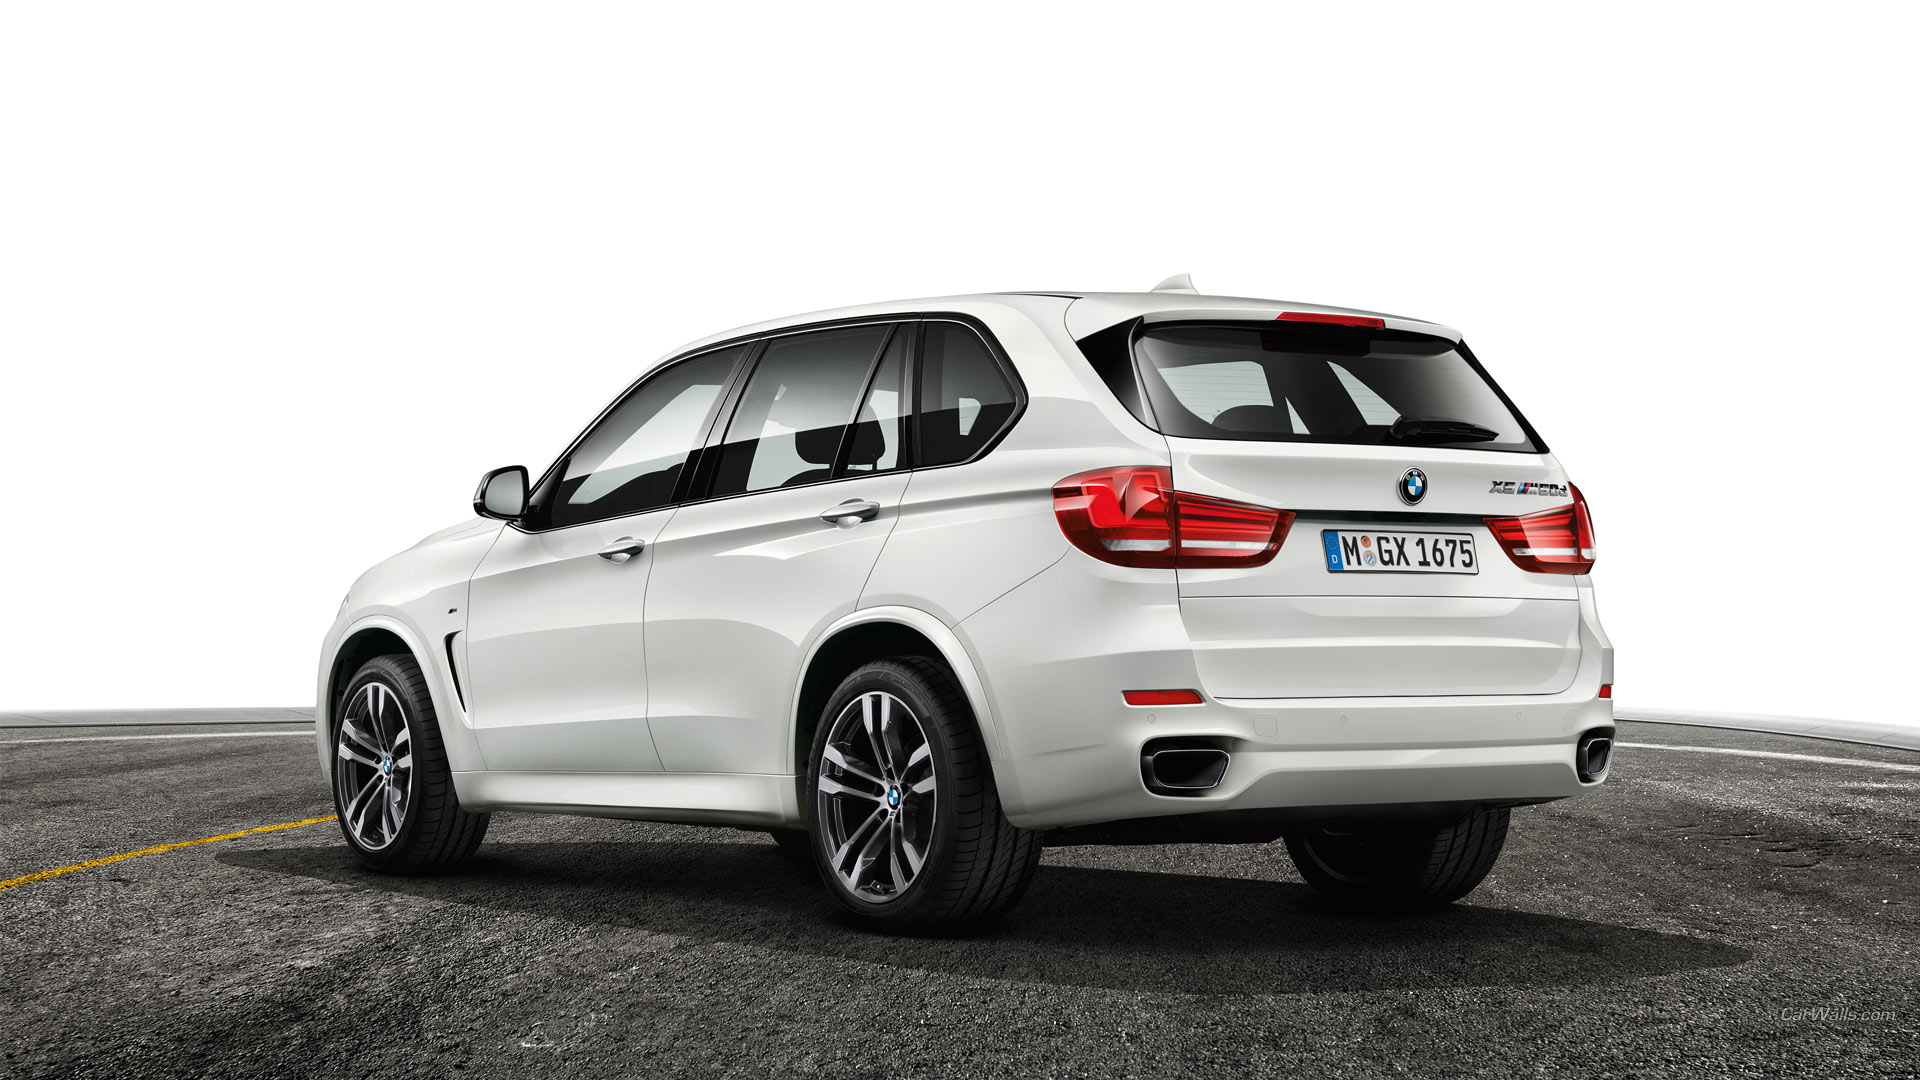 Vehicles 2014 BMW X5 M50d HD Wallpaper | Background Image